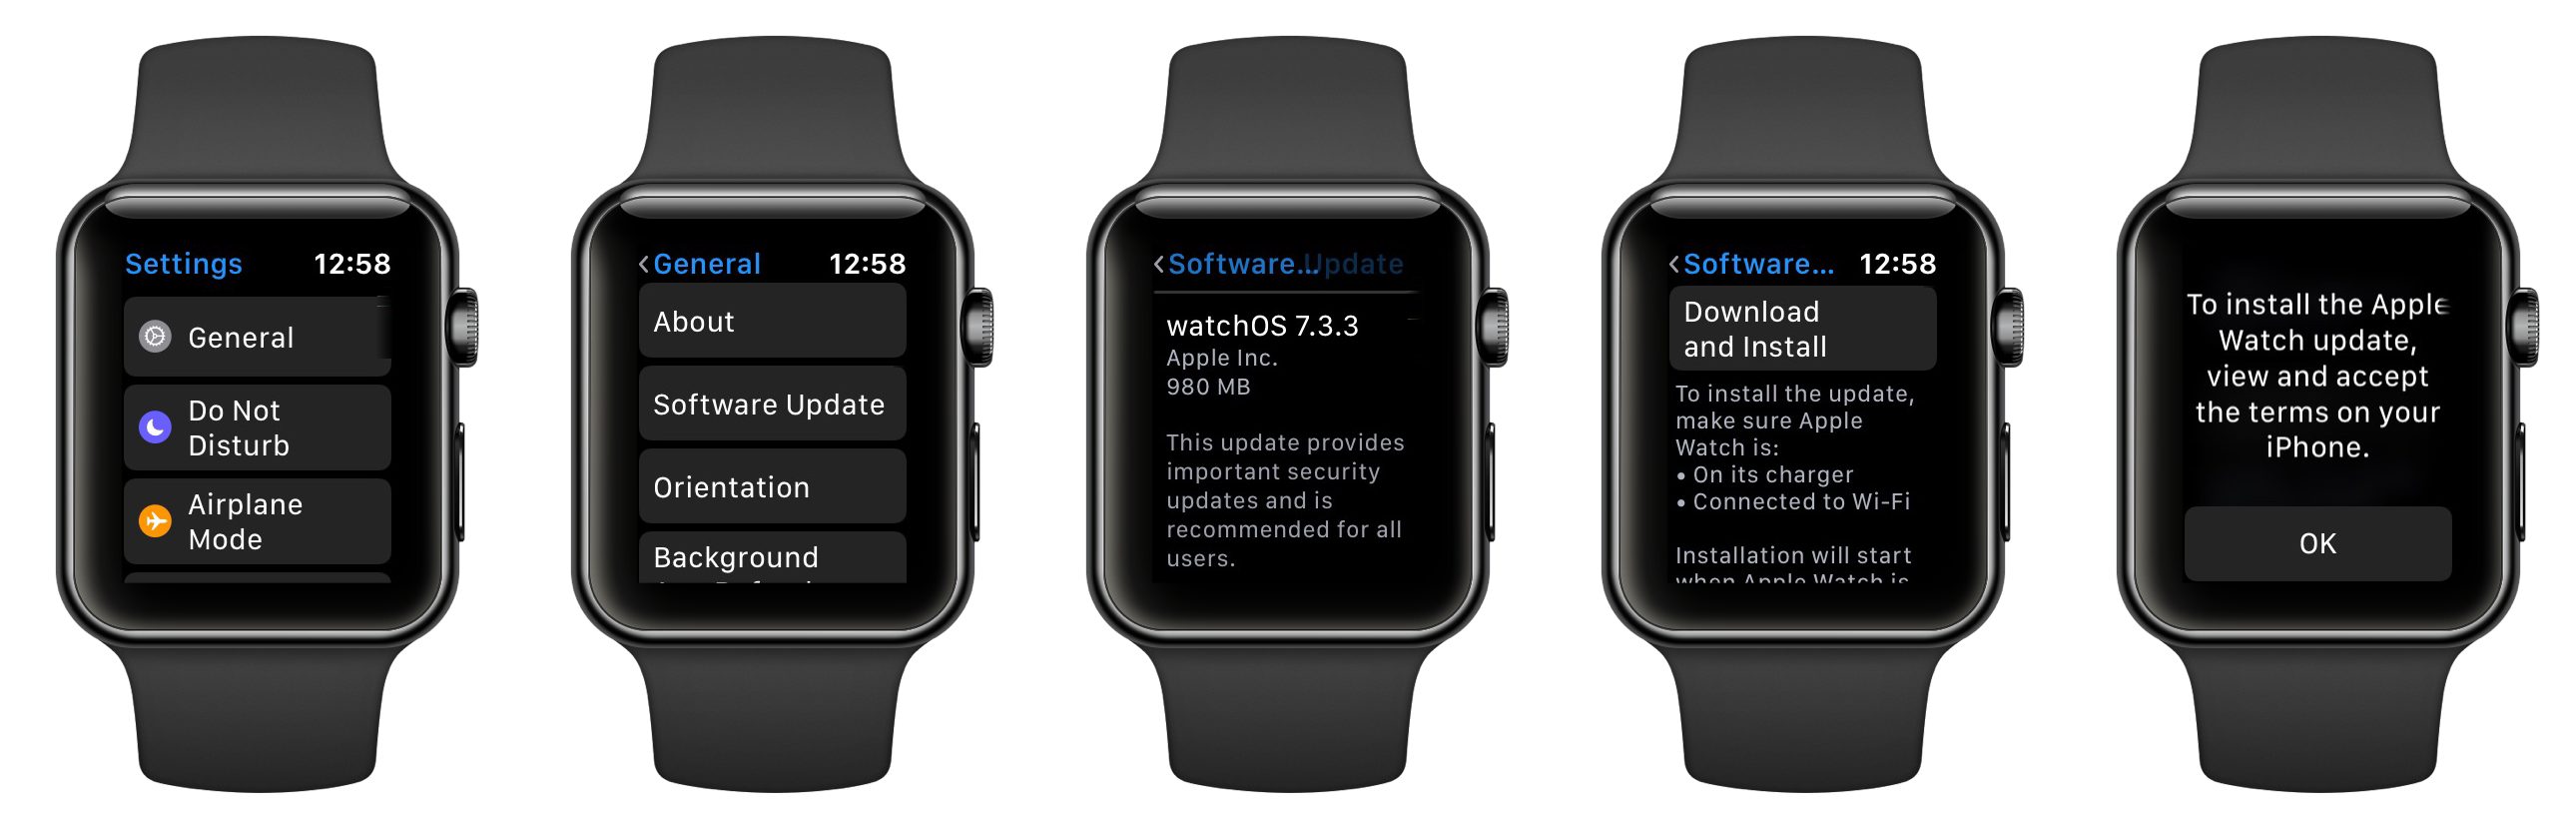 Update Apple Watch Series 3 